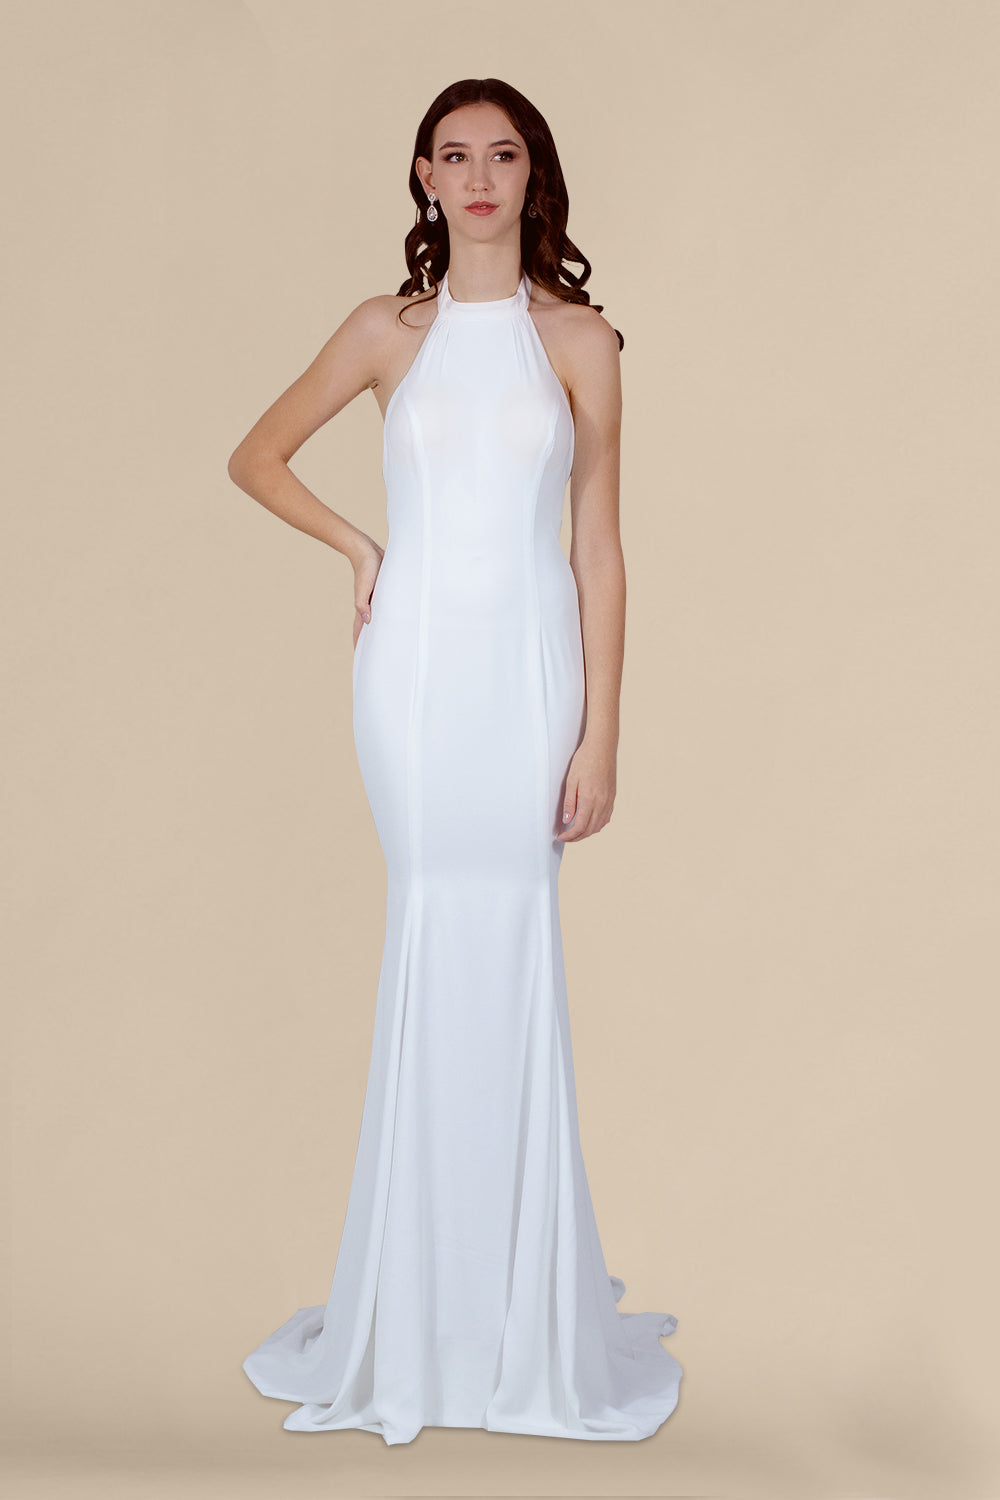 halter high neck wedding dress inspired megan markle custom made envious bridal & formal